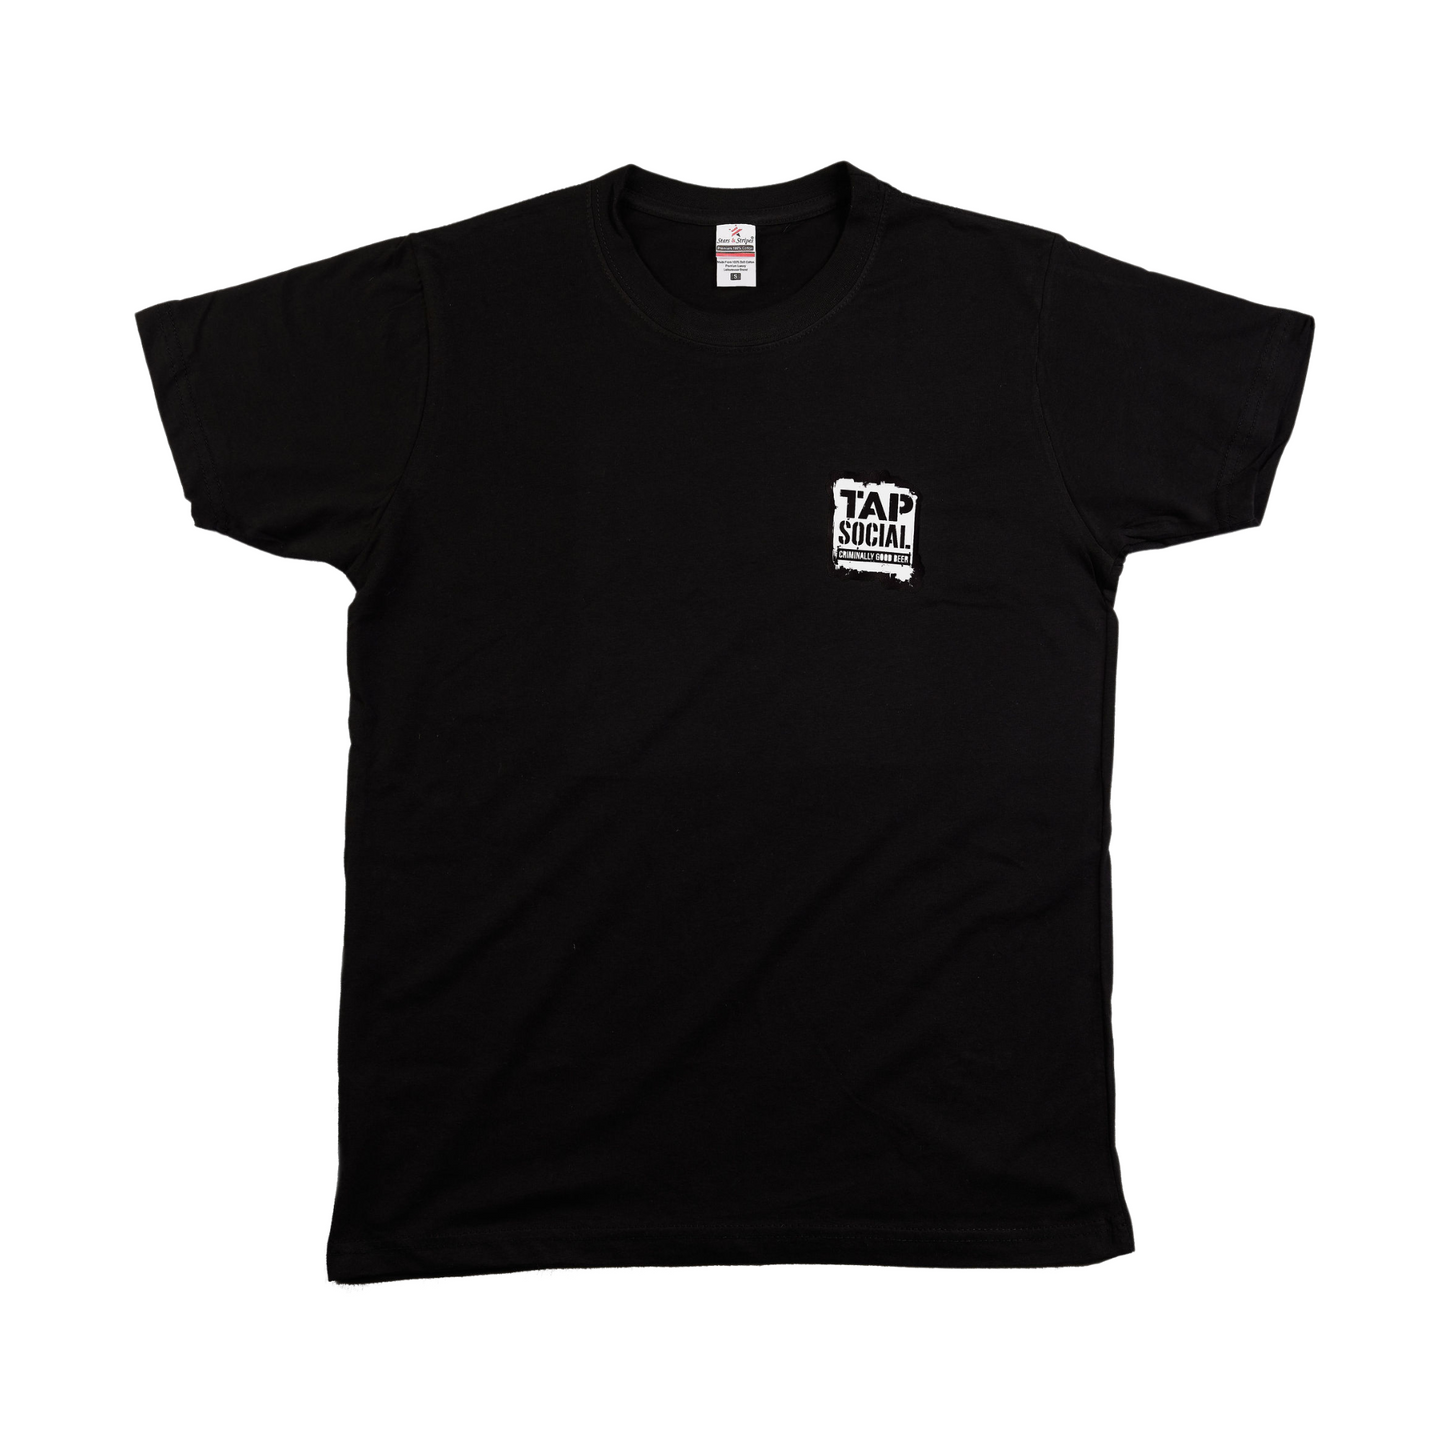 Tap Social Black T-Shirt